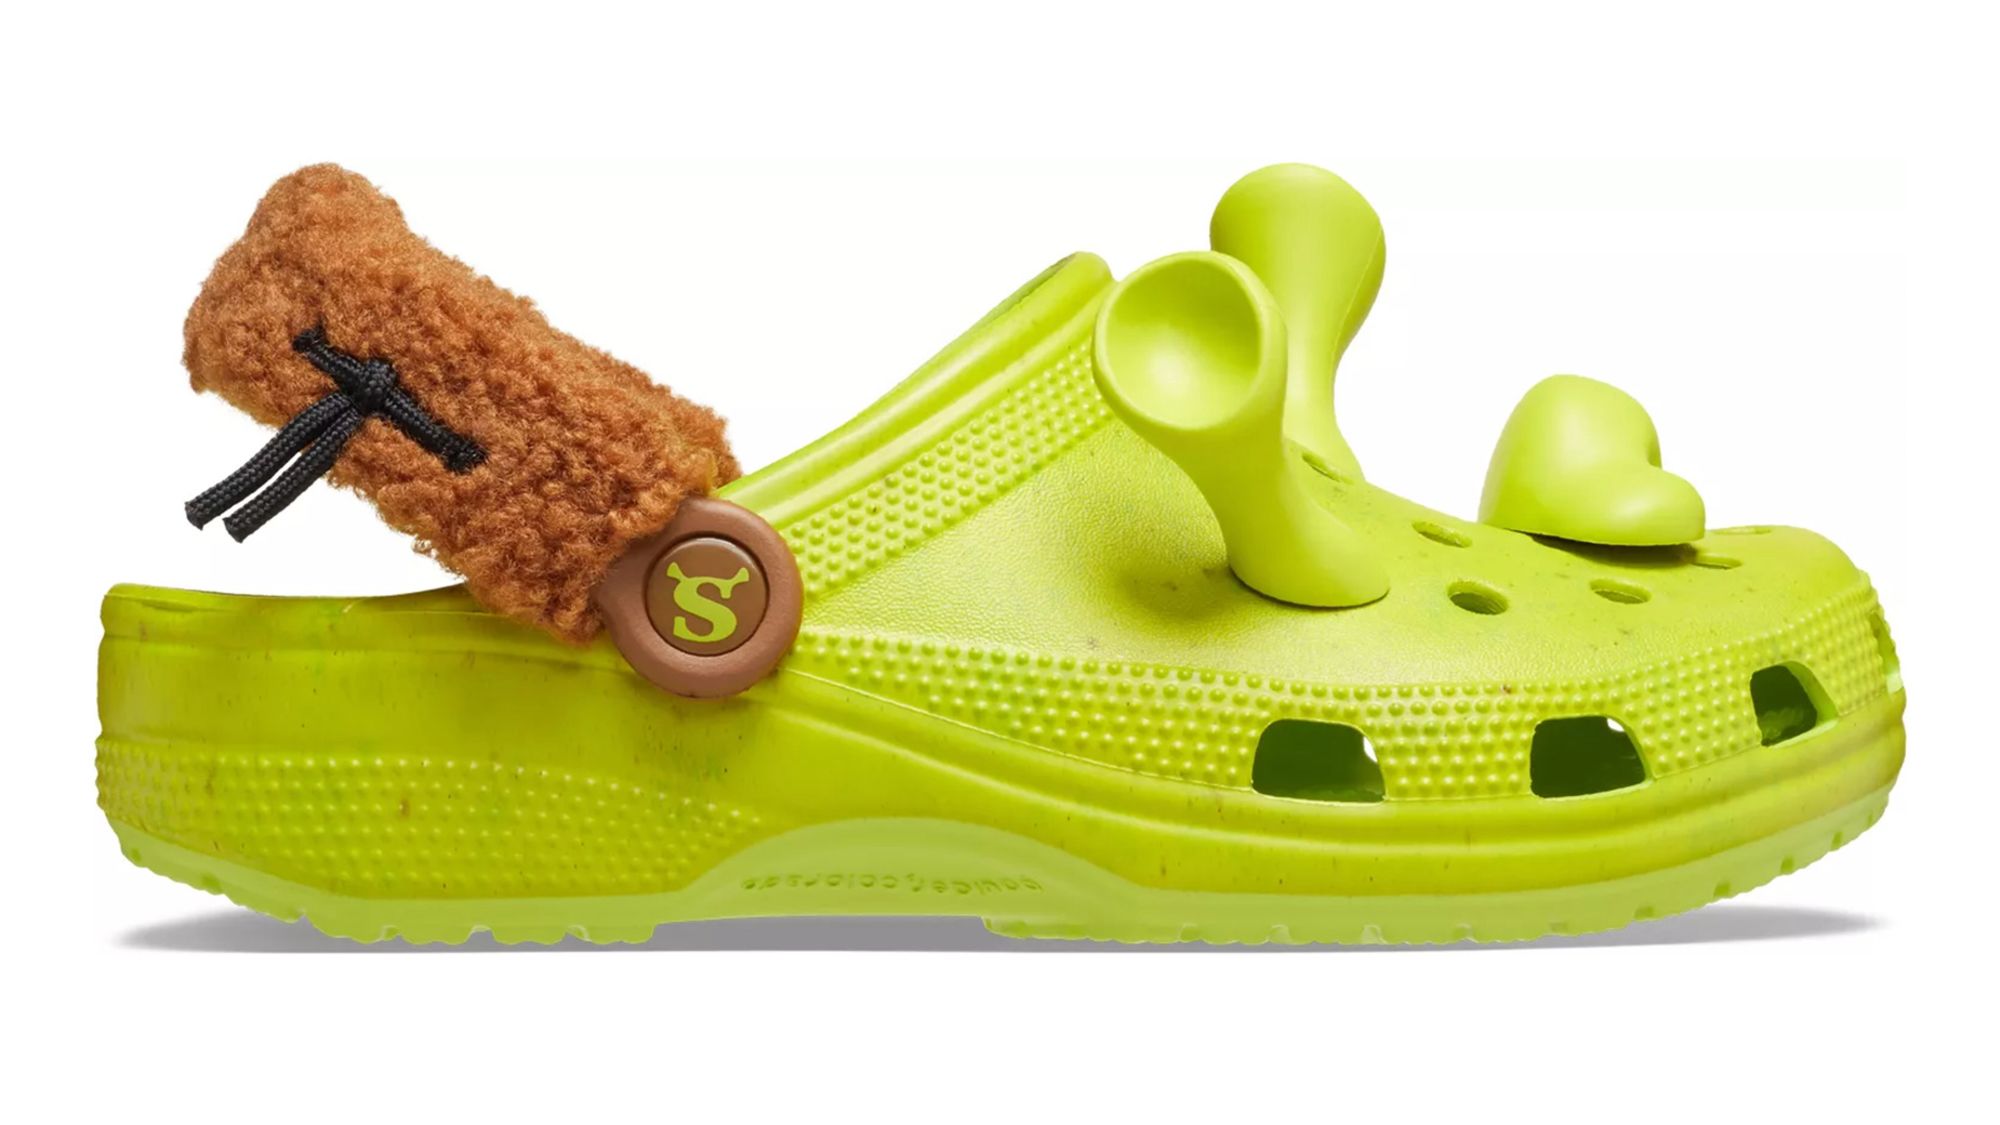 These Shrek Crocs are hideous! #crocs #shrek #crocsgang #shrekcrocs, Crocs